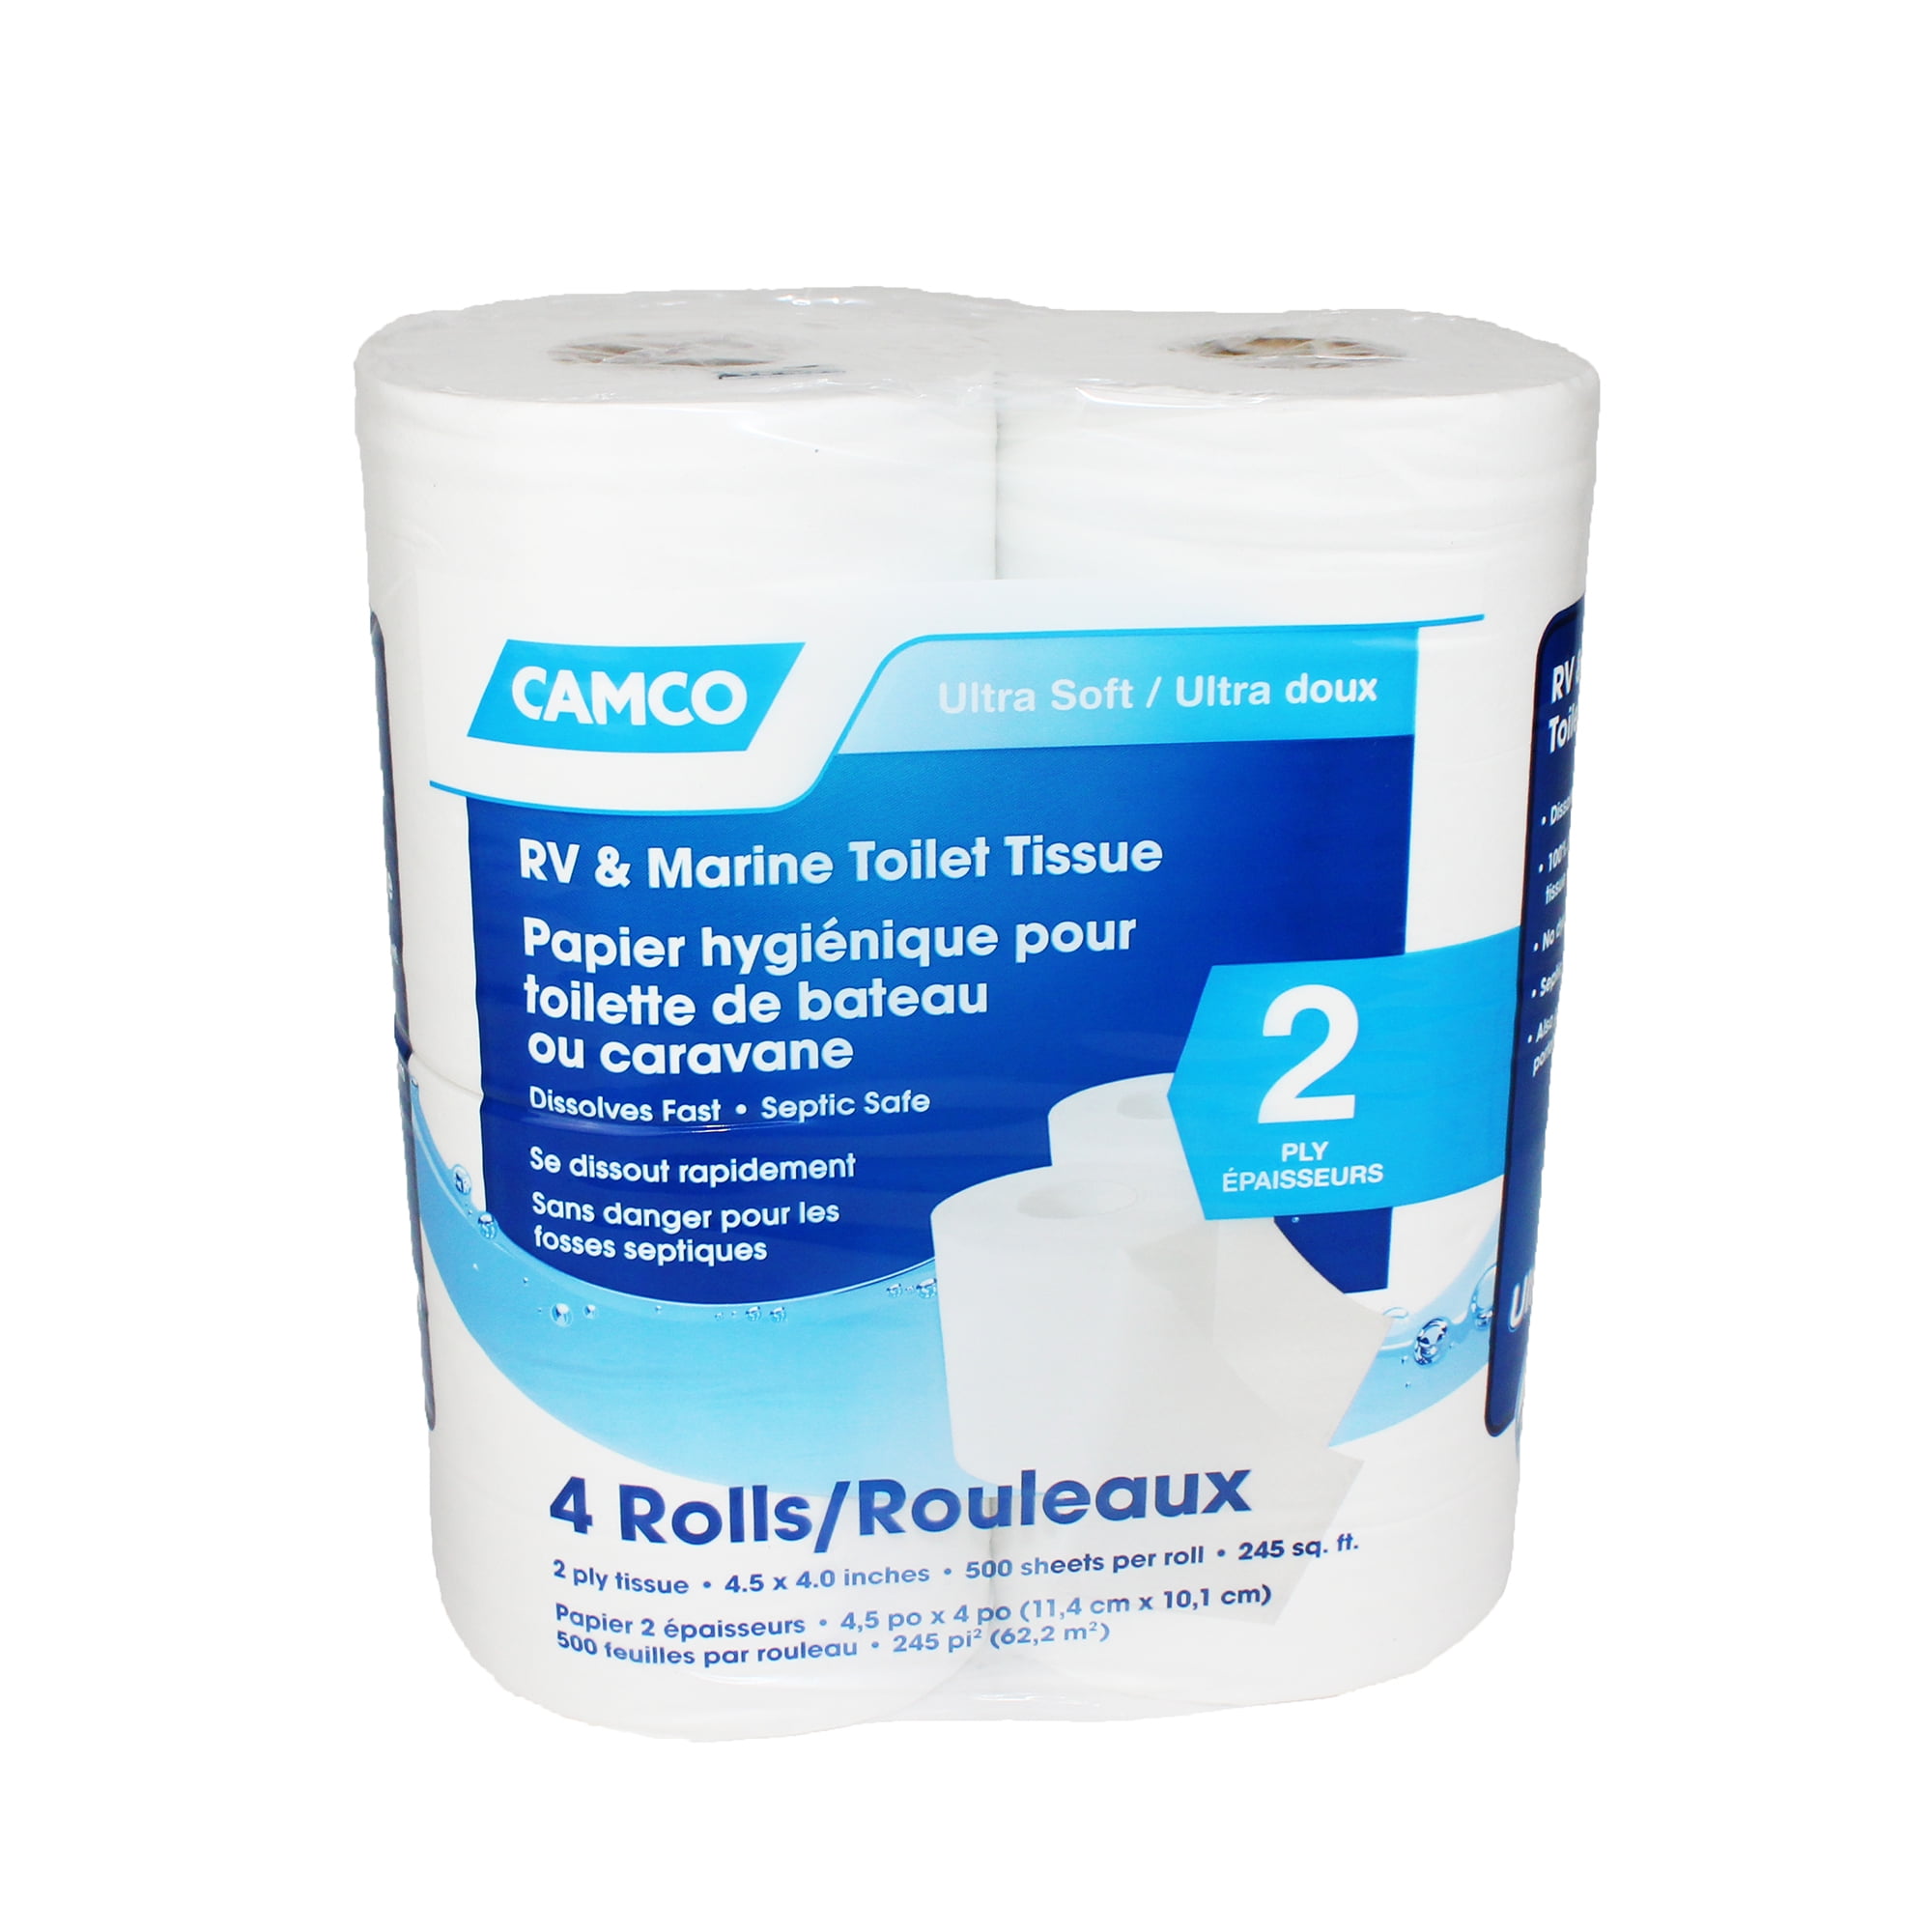 6/8/12/14 Rolls White Toilet Paper Rapid Dissolving Toilet Paper Smooth Soft Professional Series Premium 3-Ply Toilet Paper